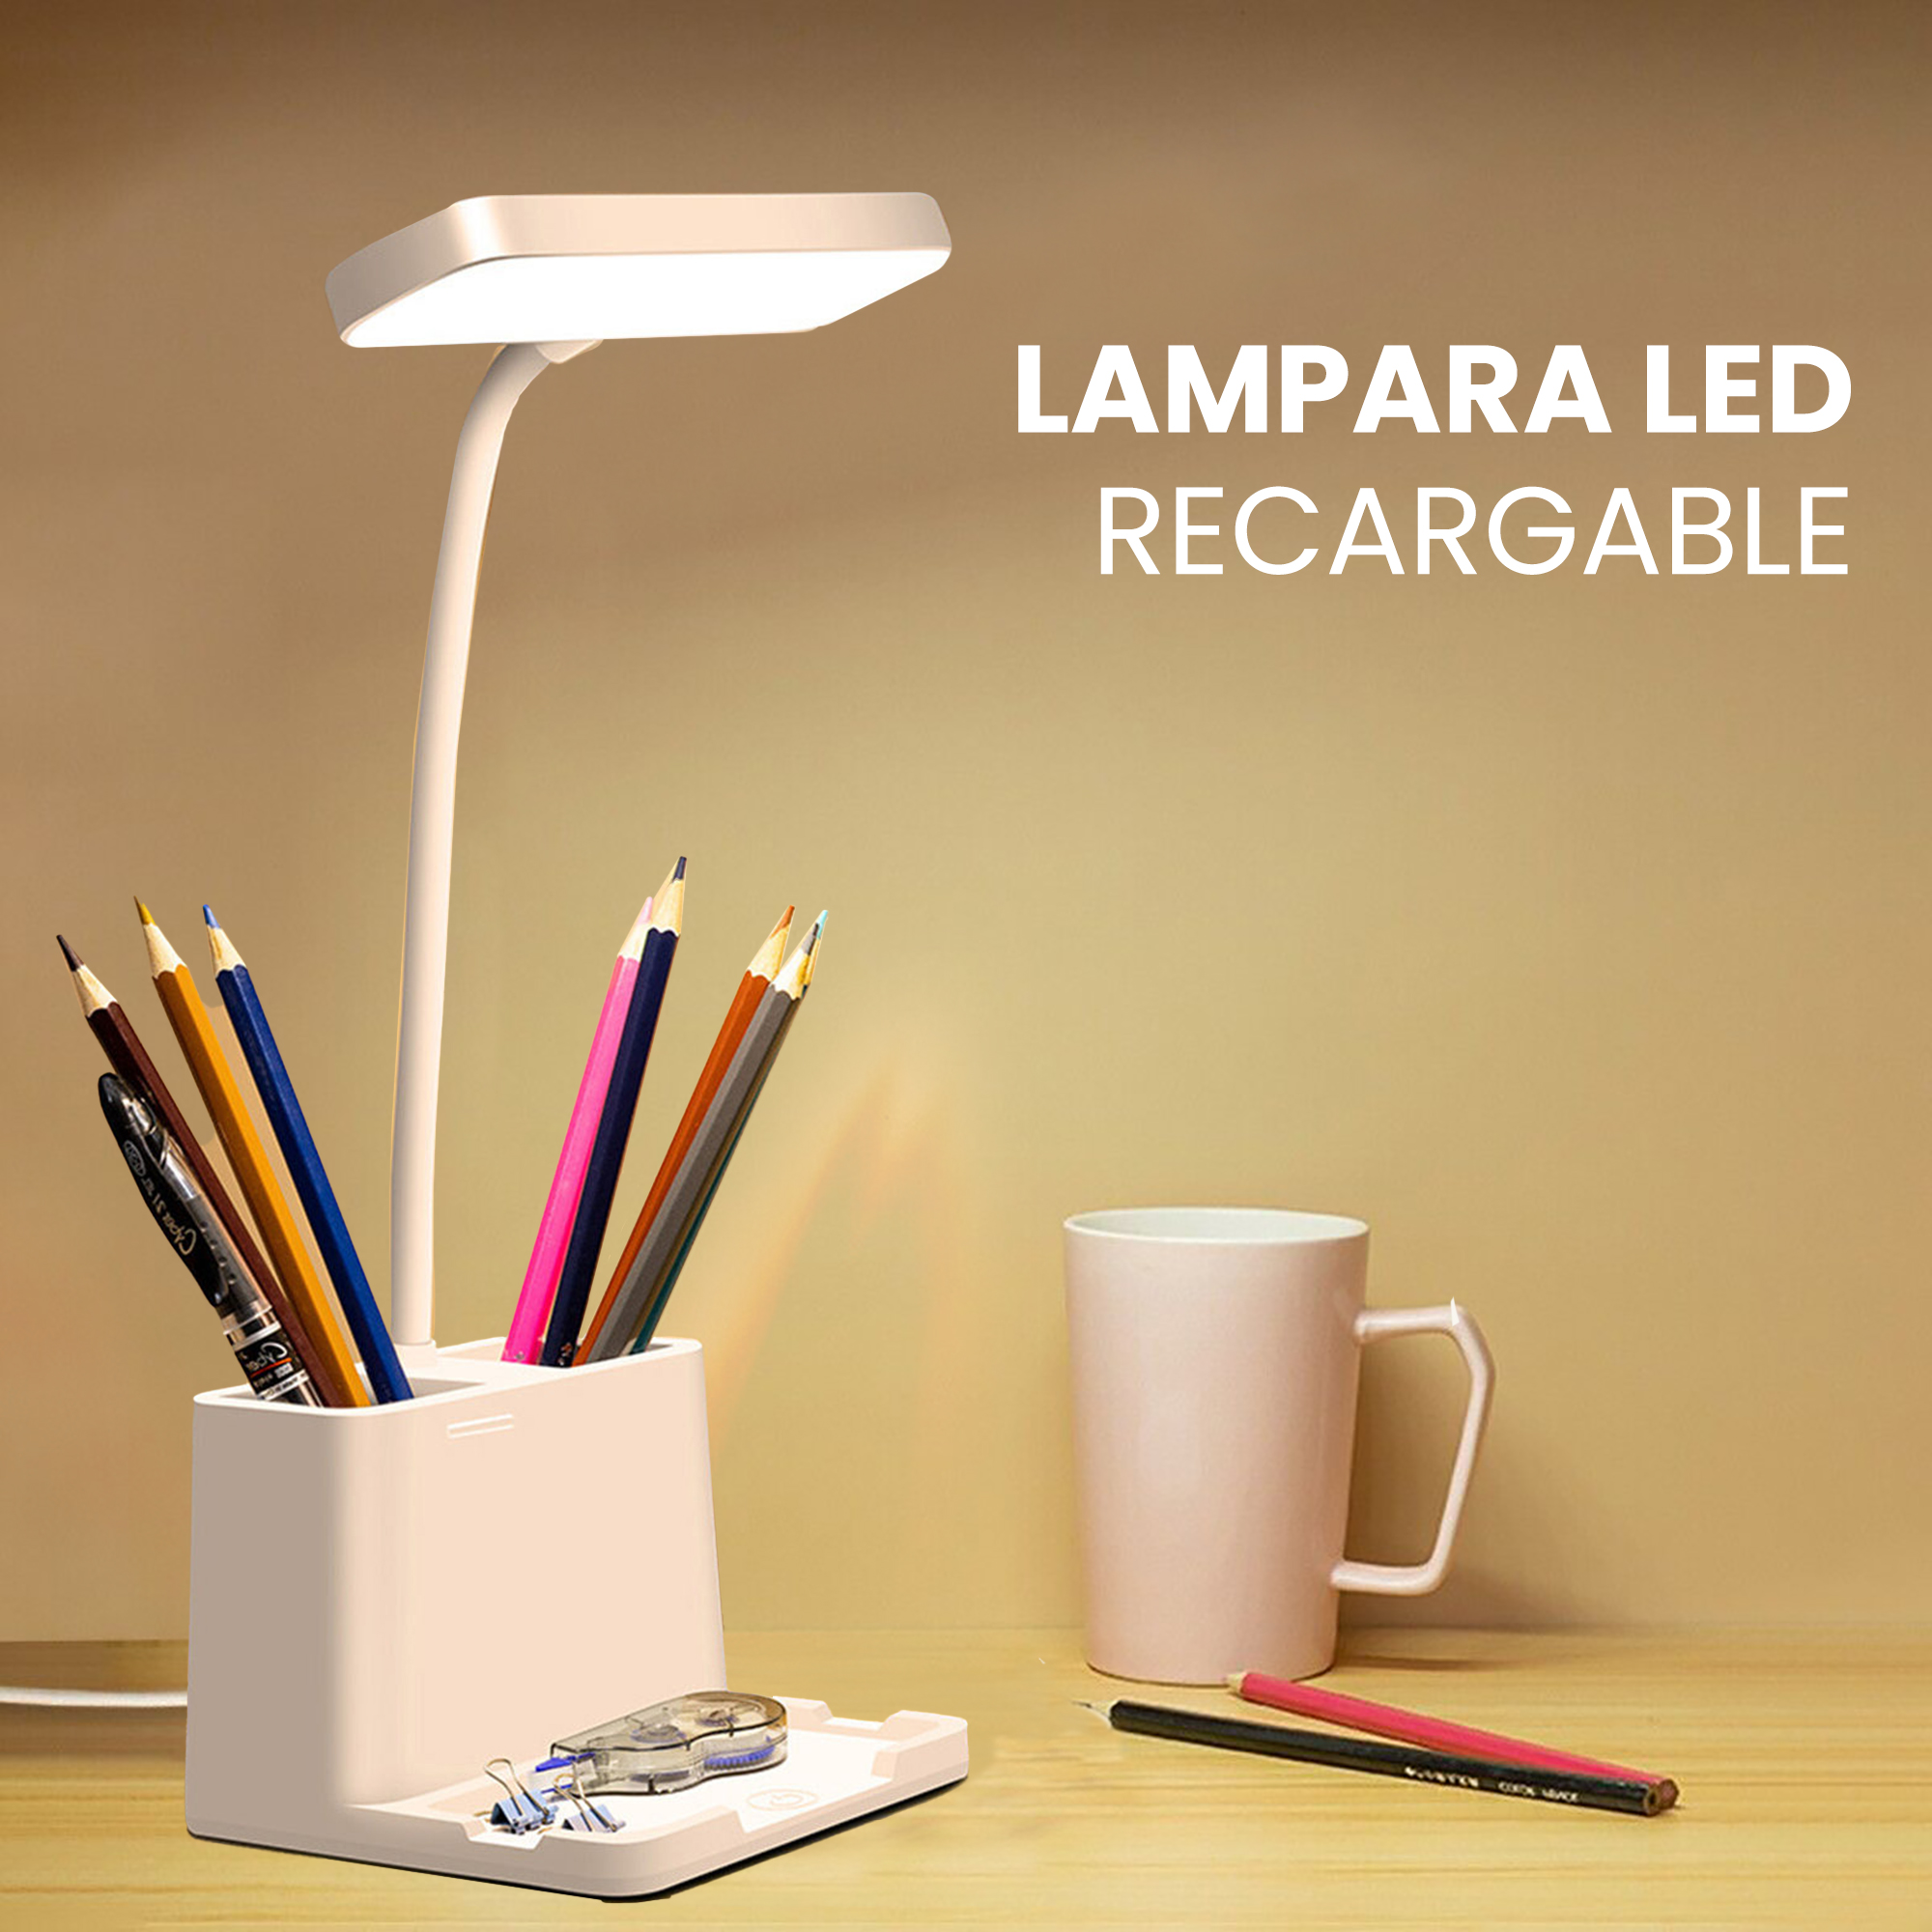 Lampara LED Recargable